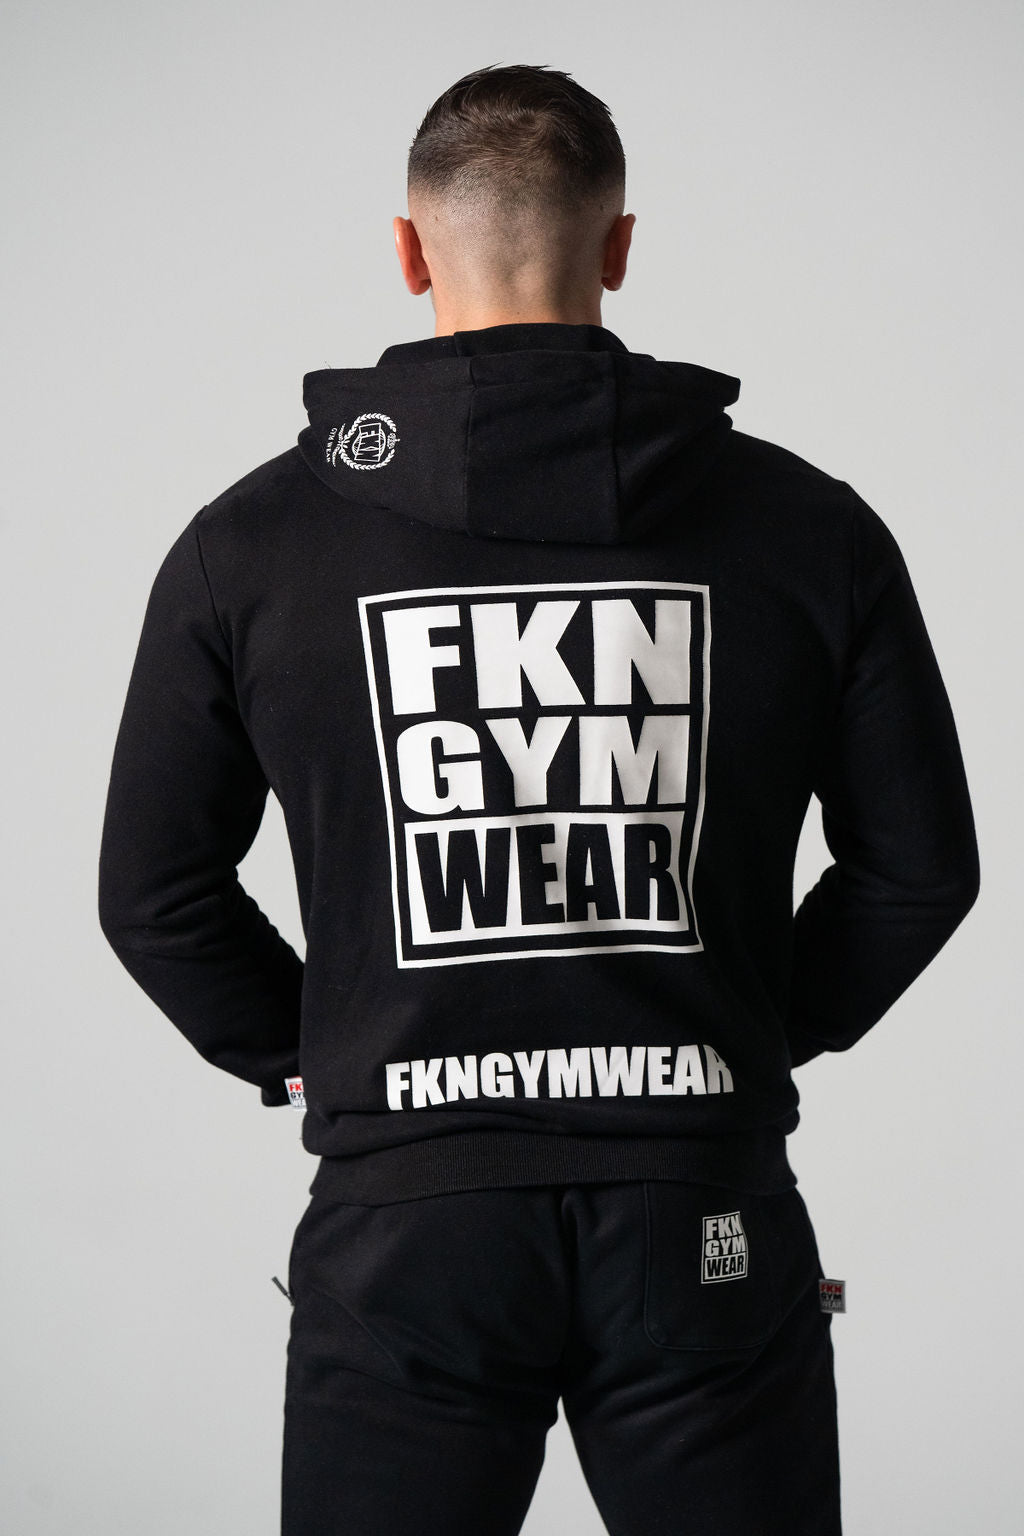 Women's Gym Track Pant - Bootyfit - FKN Gym Wear!